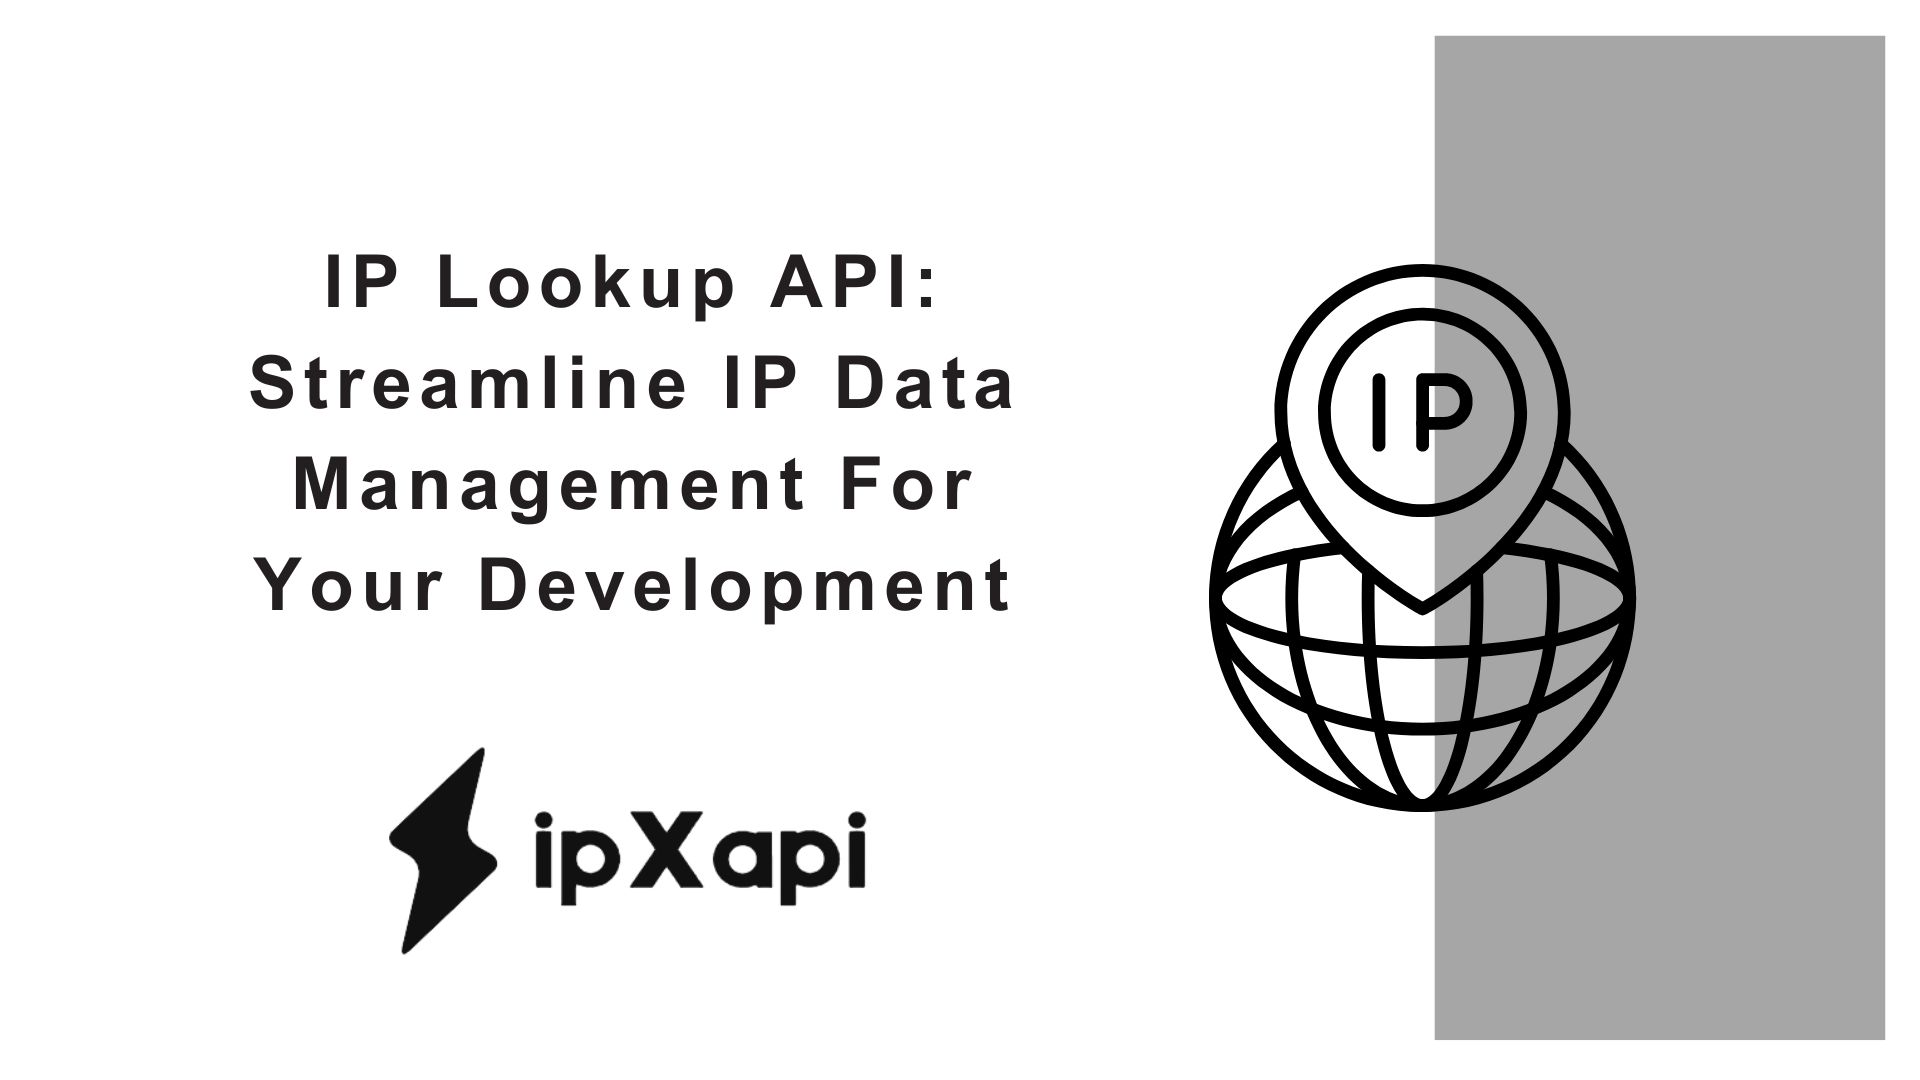 IP Lookup API: Streamline IP Data Management For Your Development